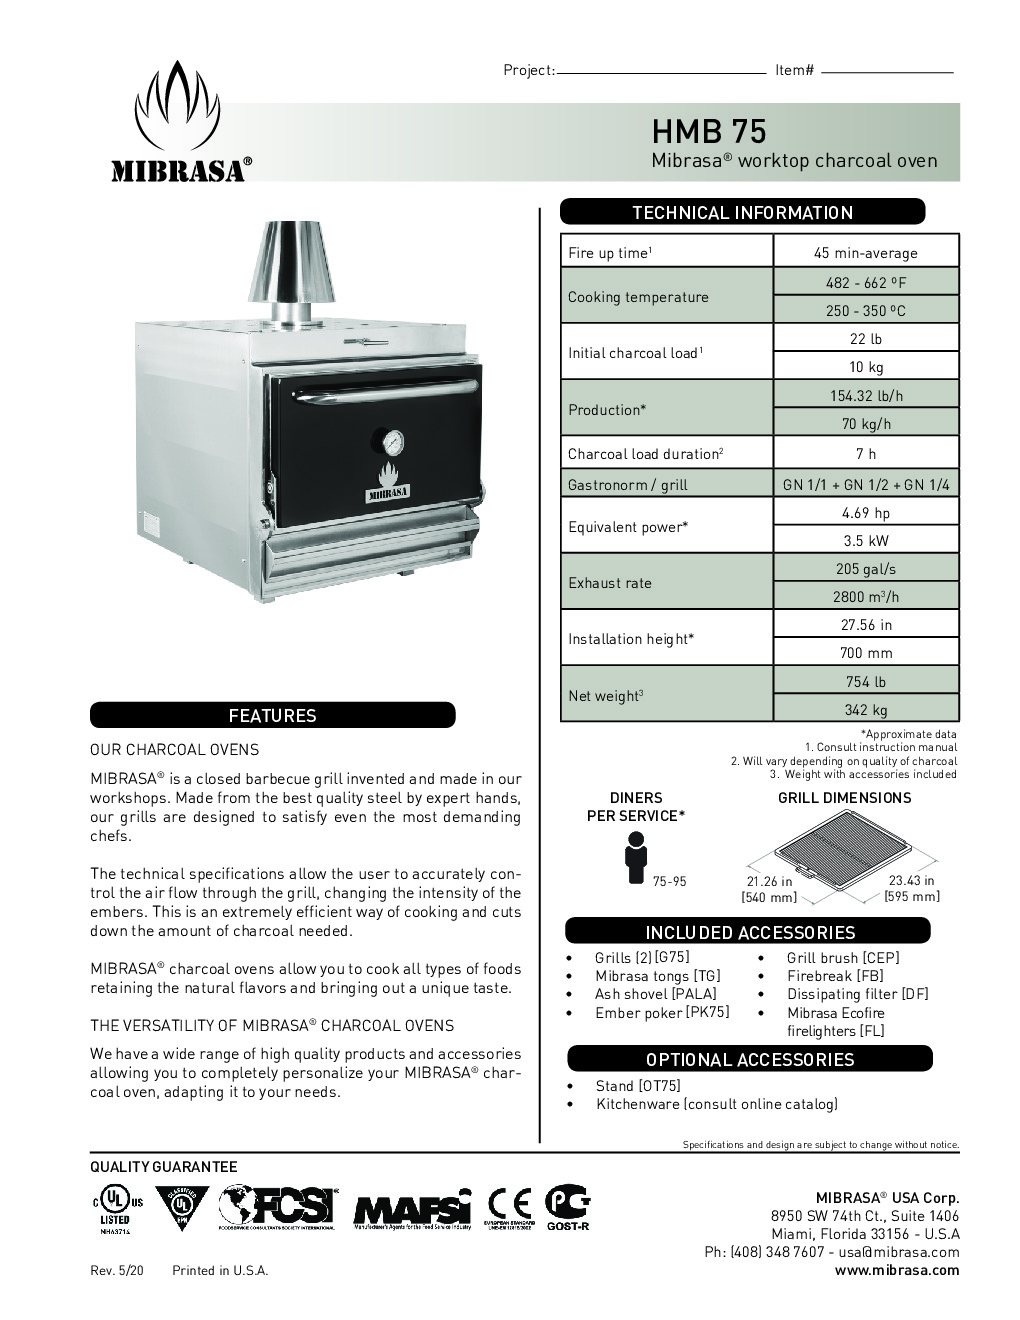 Mibrasa HMB75 Charcoal Broiler Oven